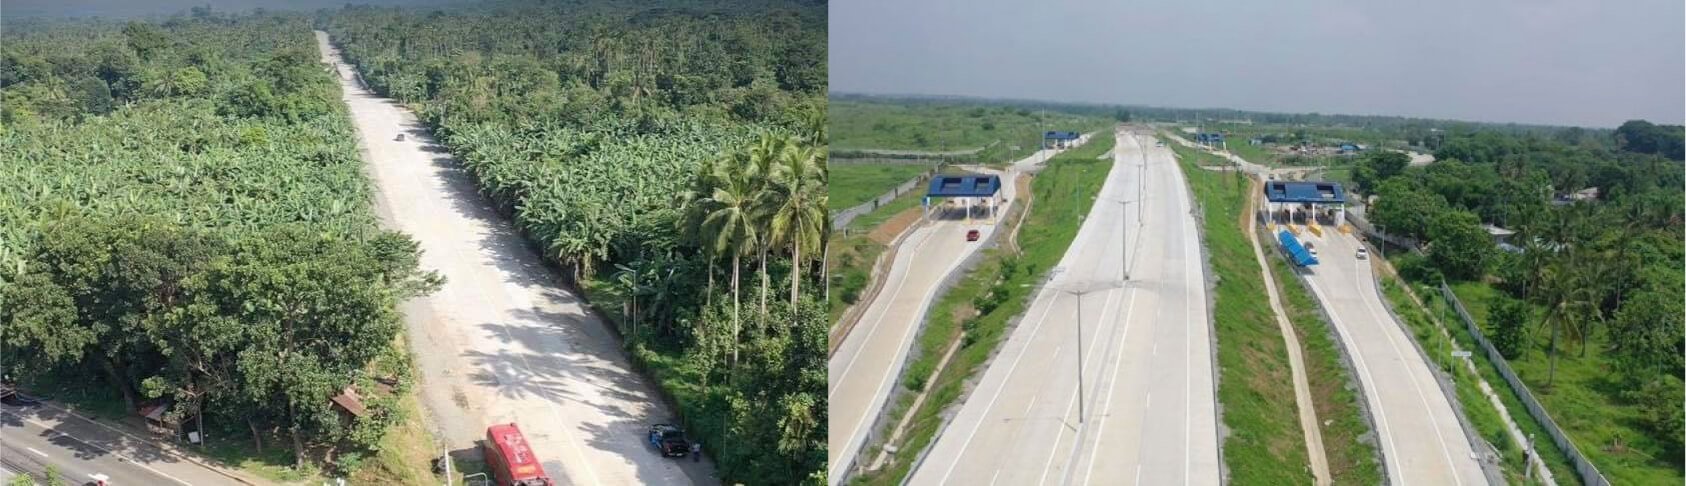 new roads and expressways in laguna 2021